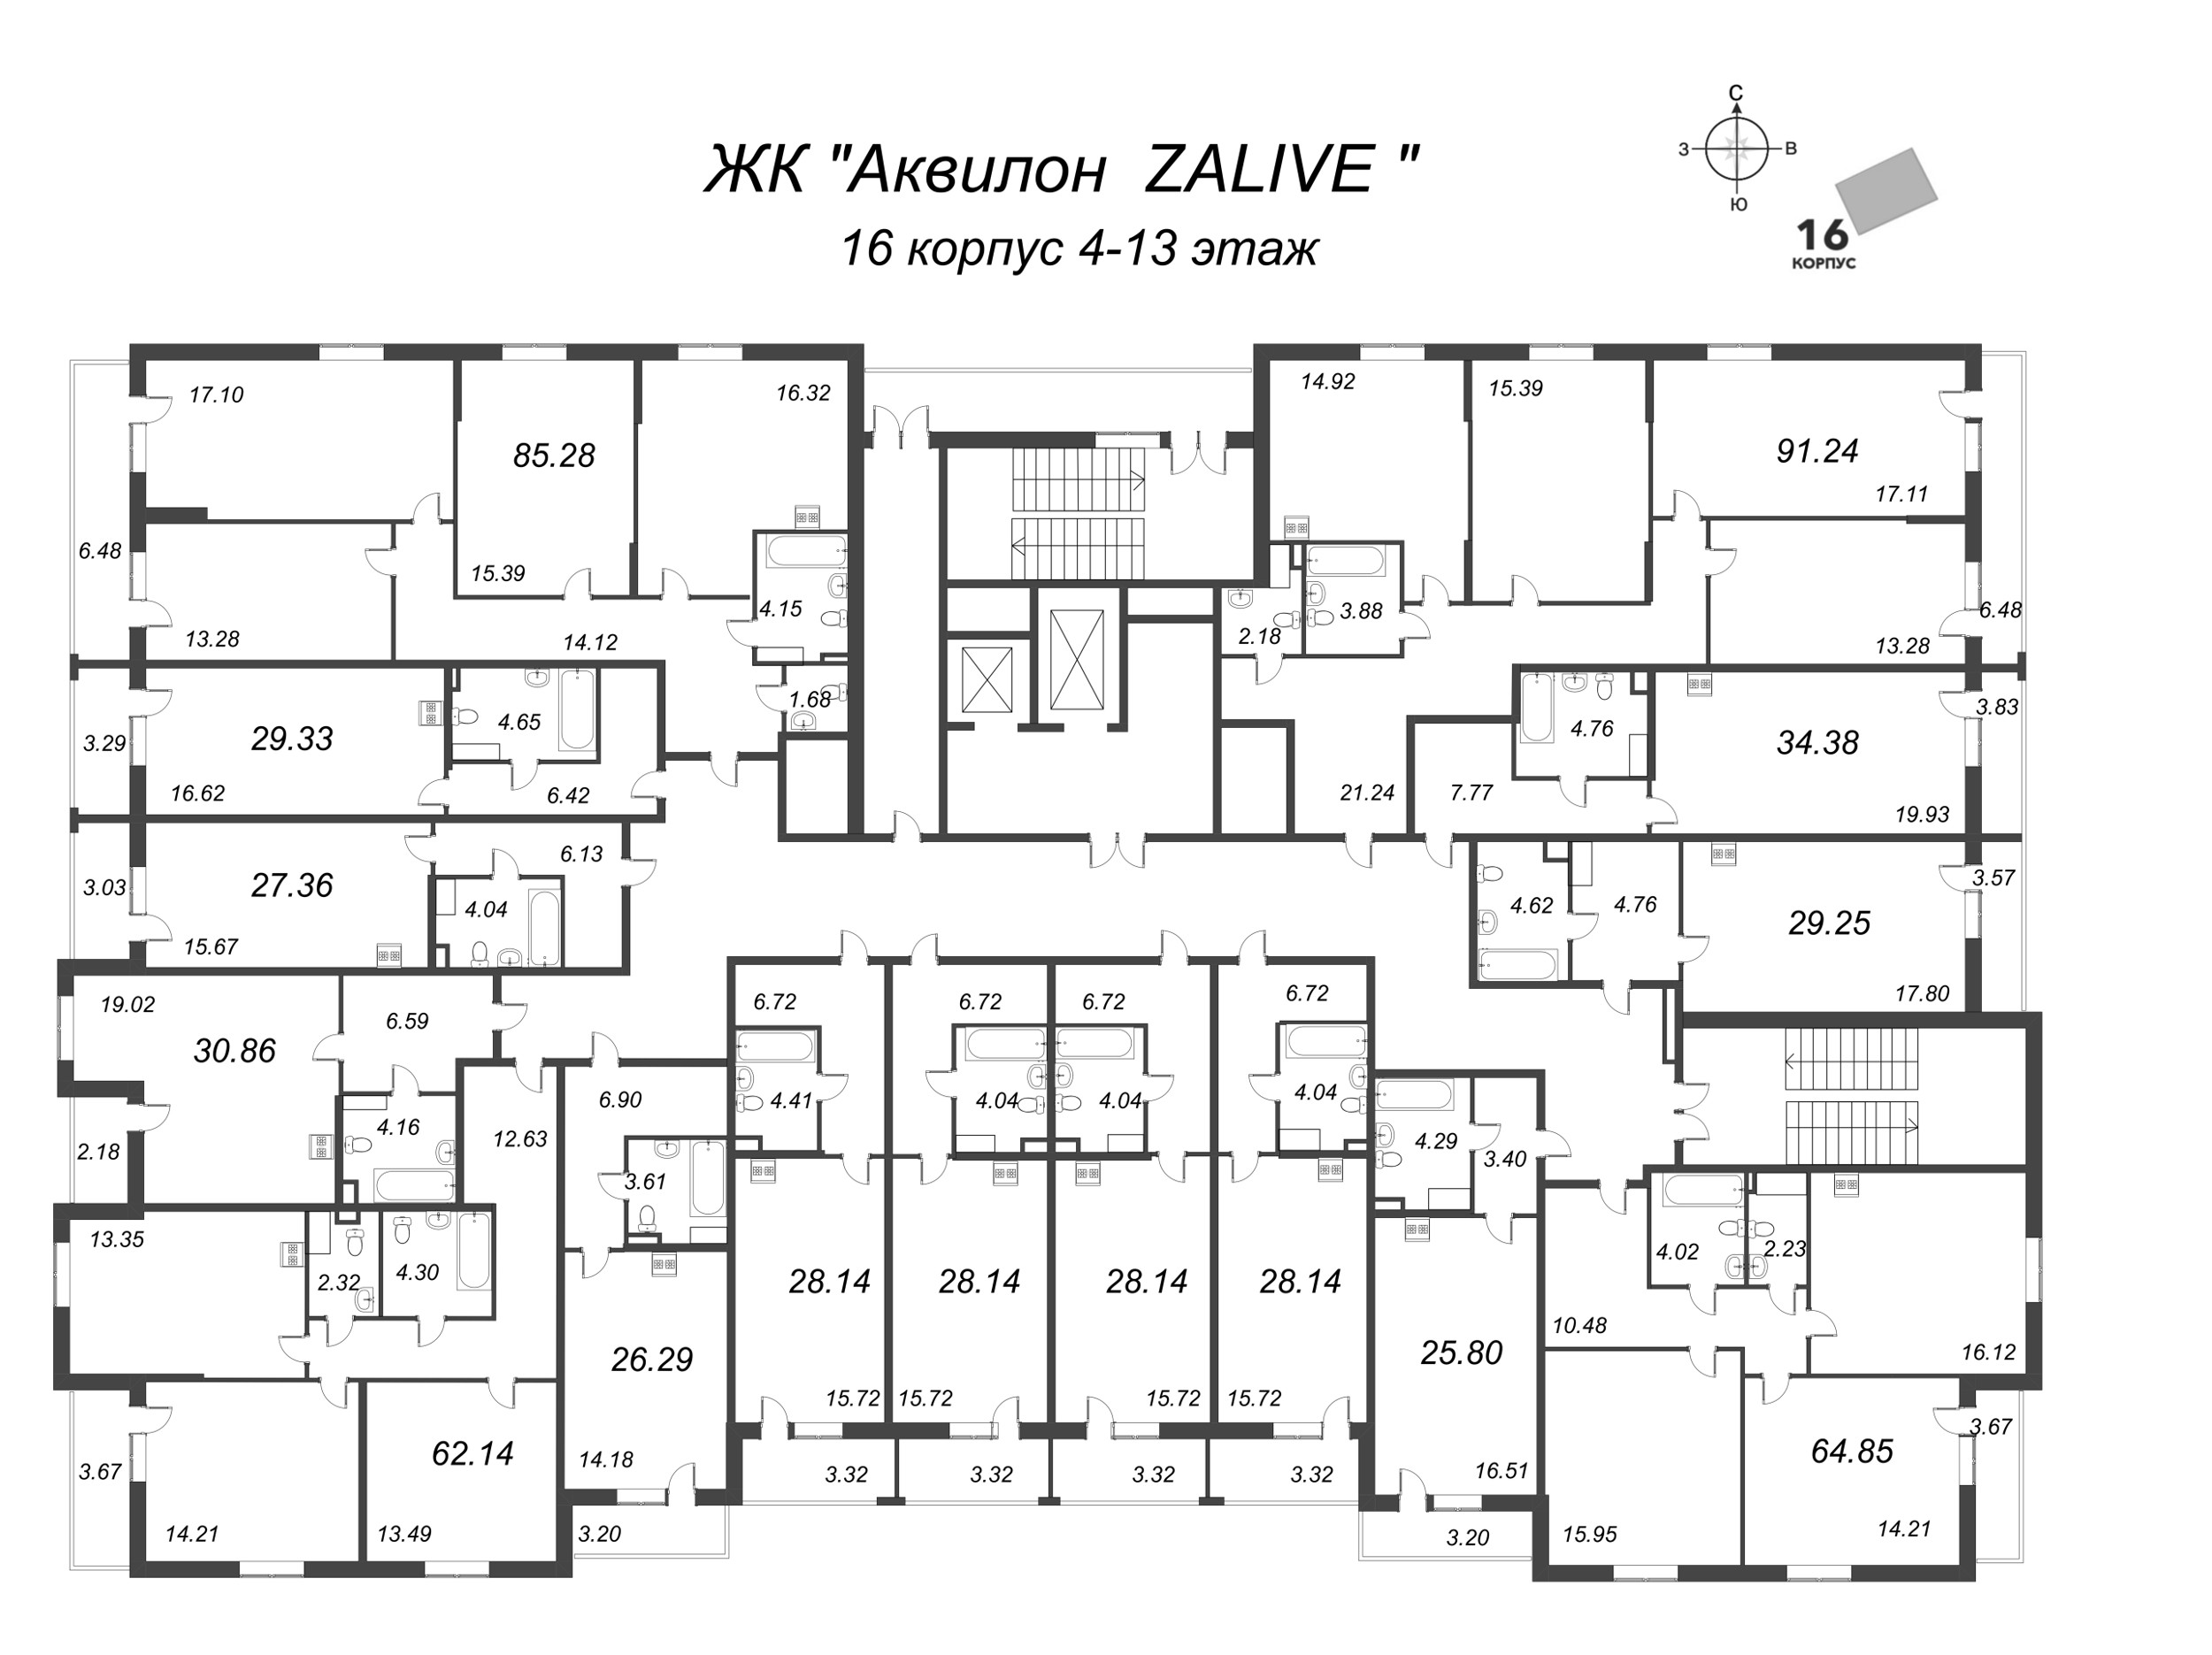 4-комнатная (Евро) квартира, 91.24 м² - планировка этажа